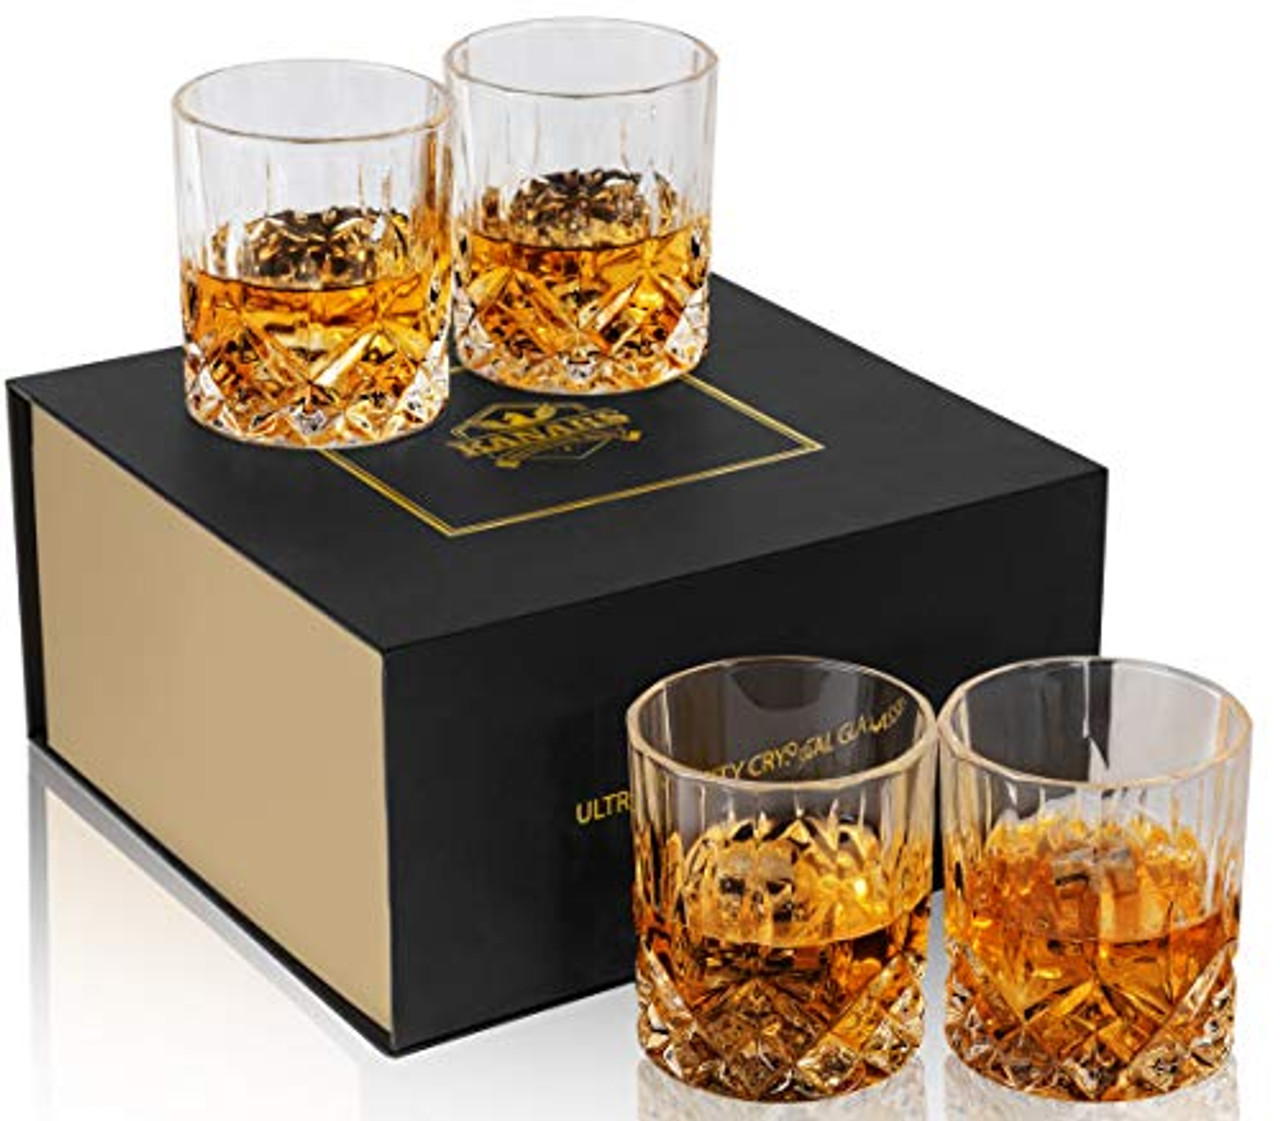 Old Fashioned Whiskey Glasses with Luxury Box - 10 Oz Rocks